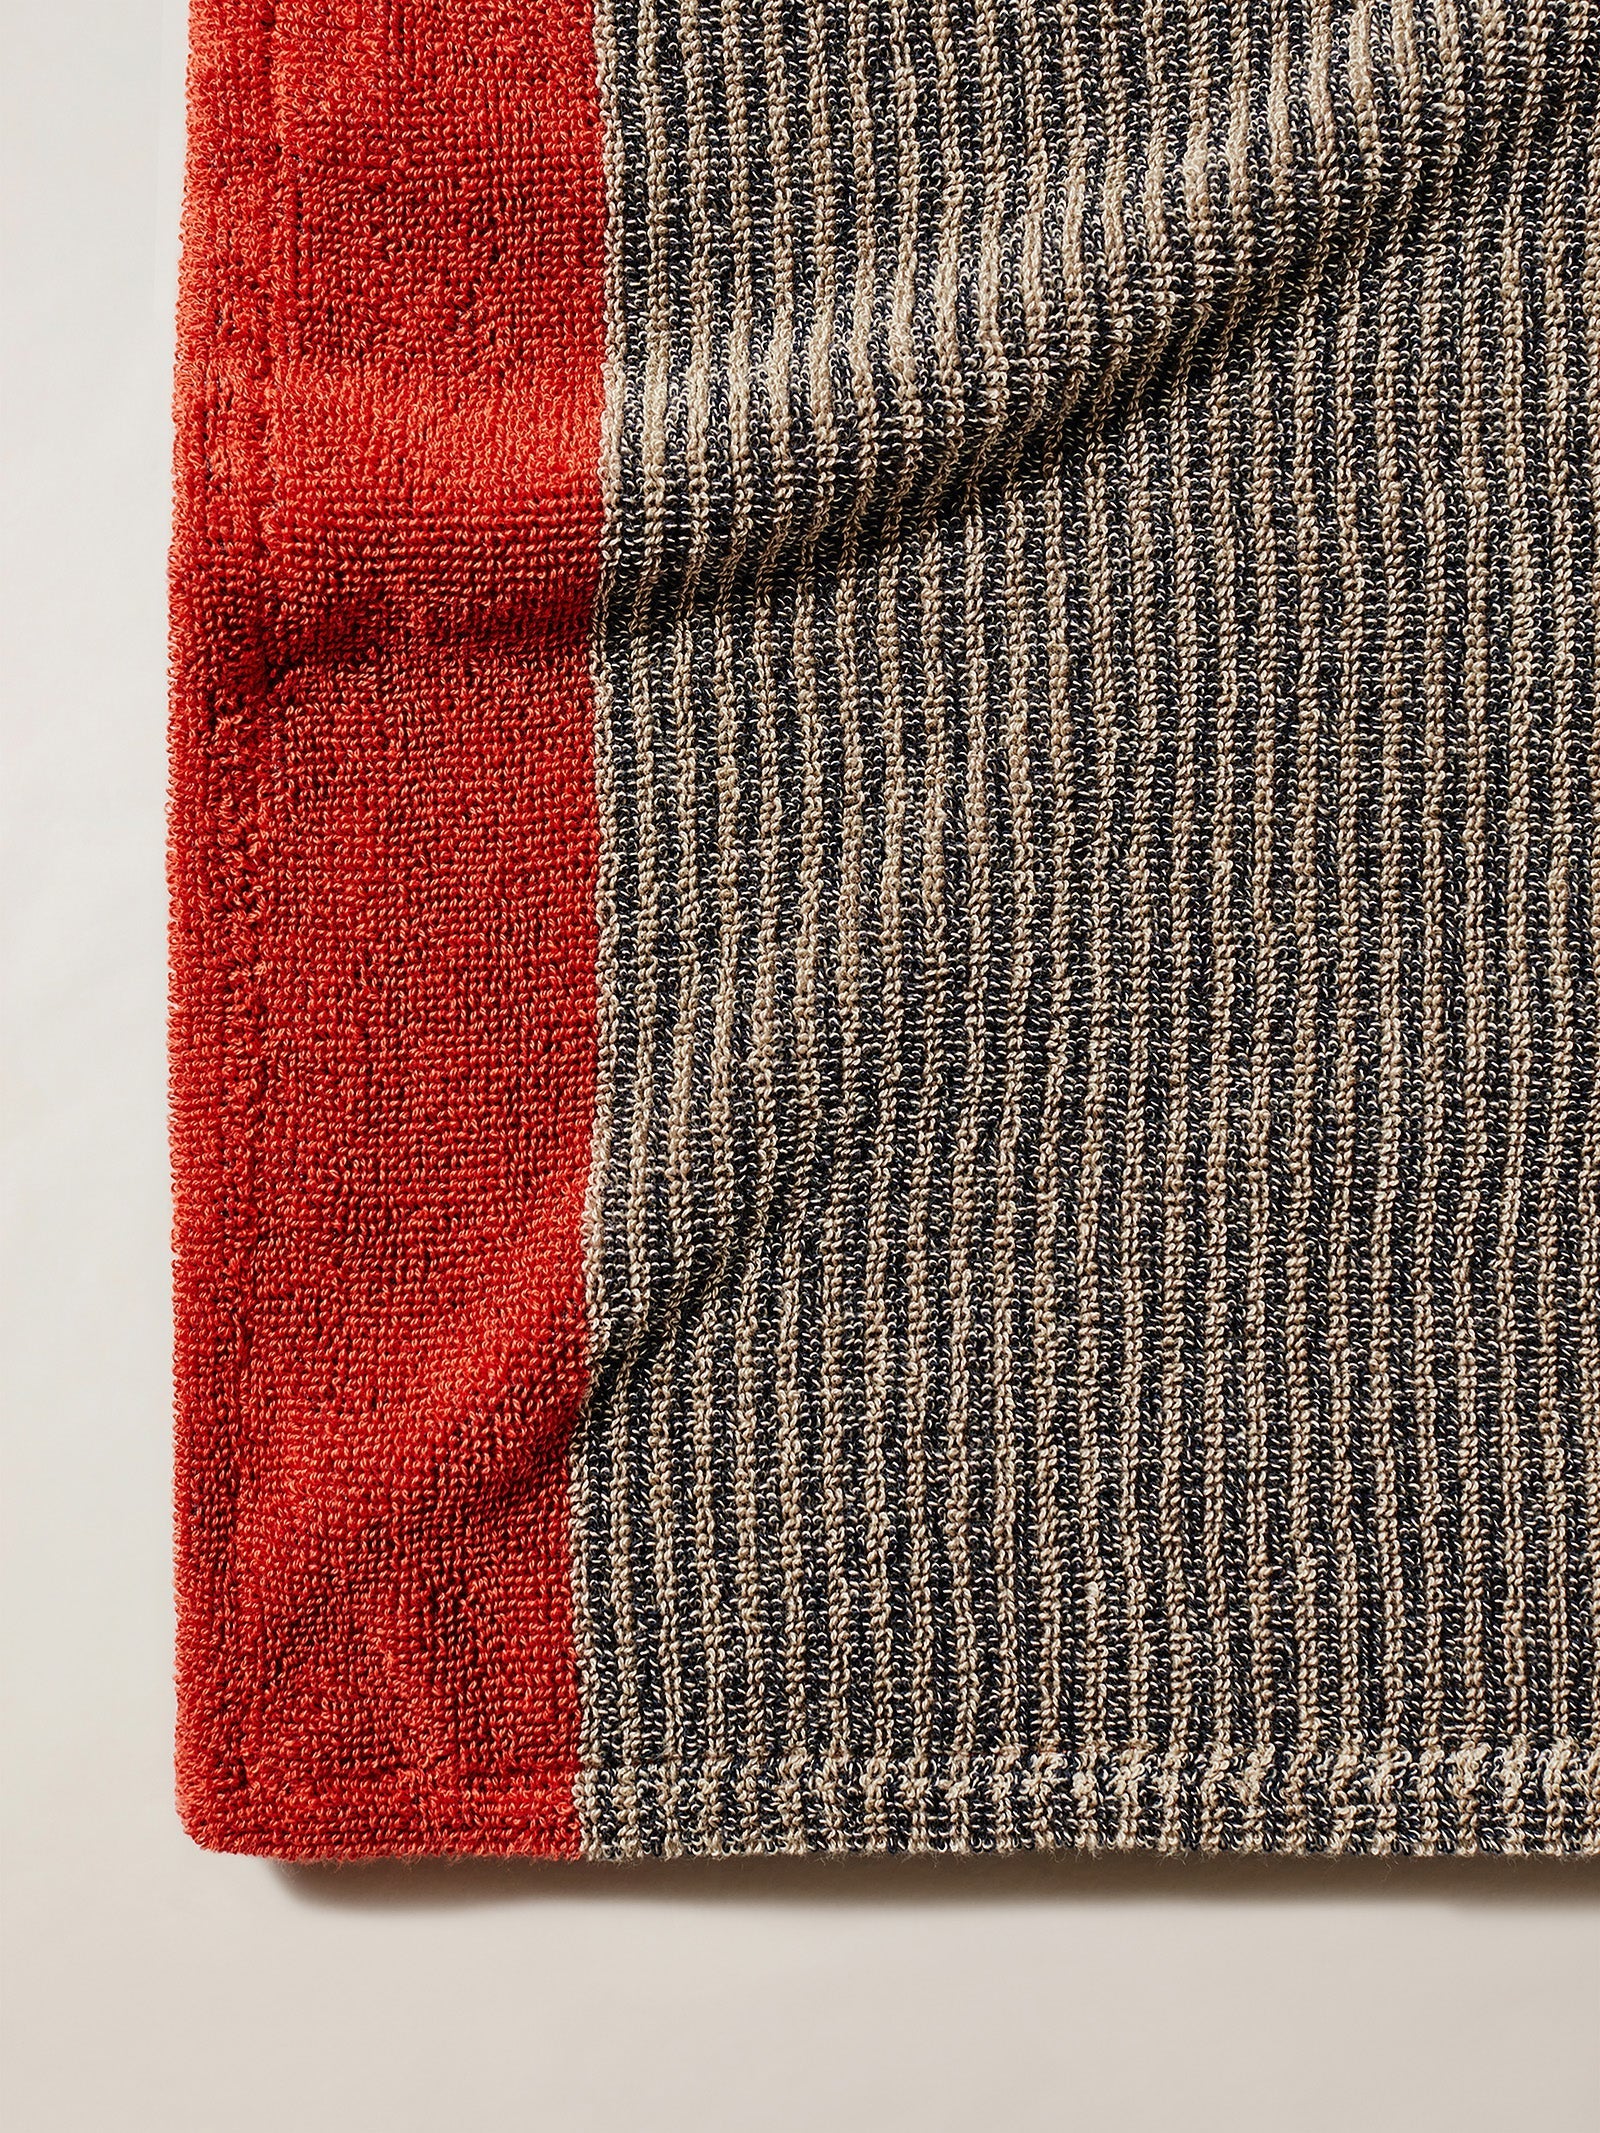 Smoke & Terra Red Towel